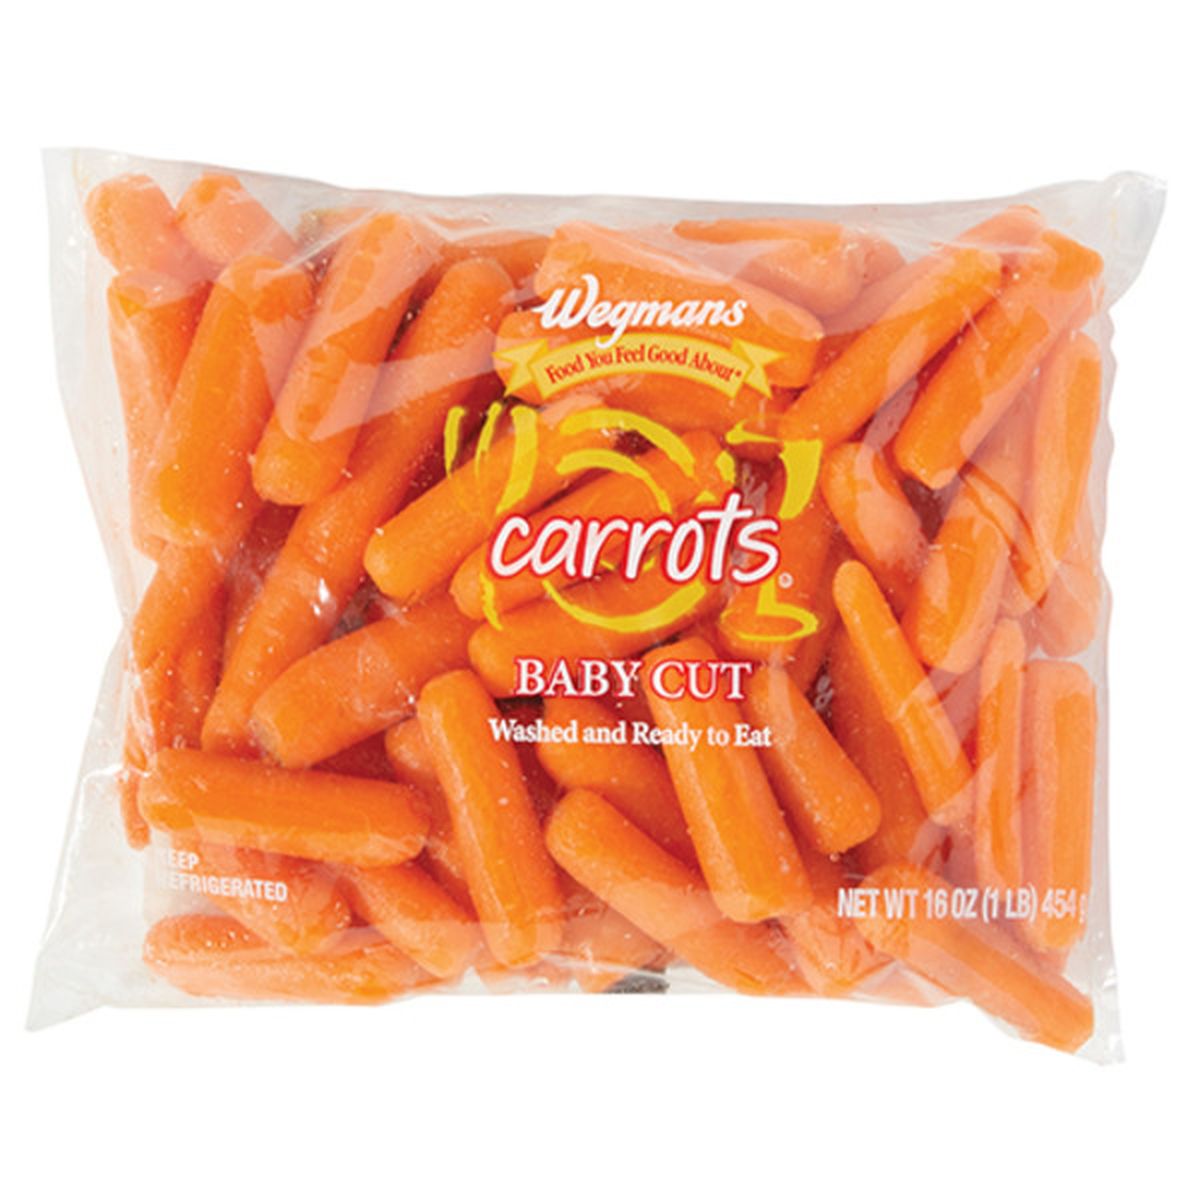 Calories in Wegmans Baby Cut Carrots